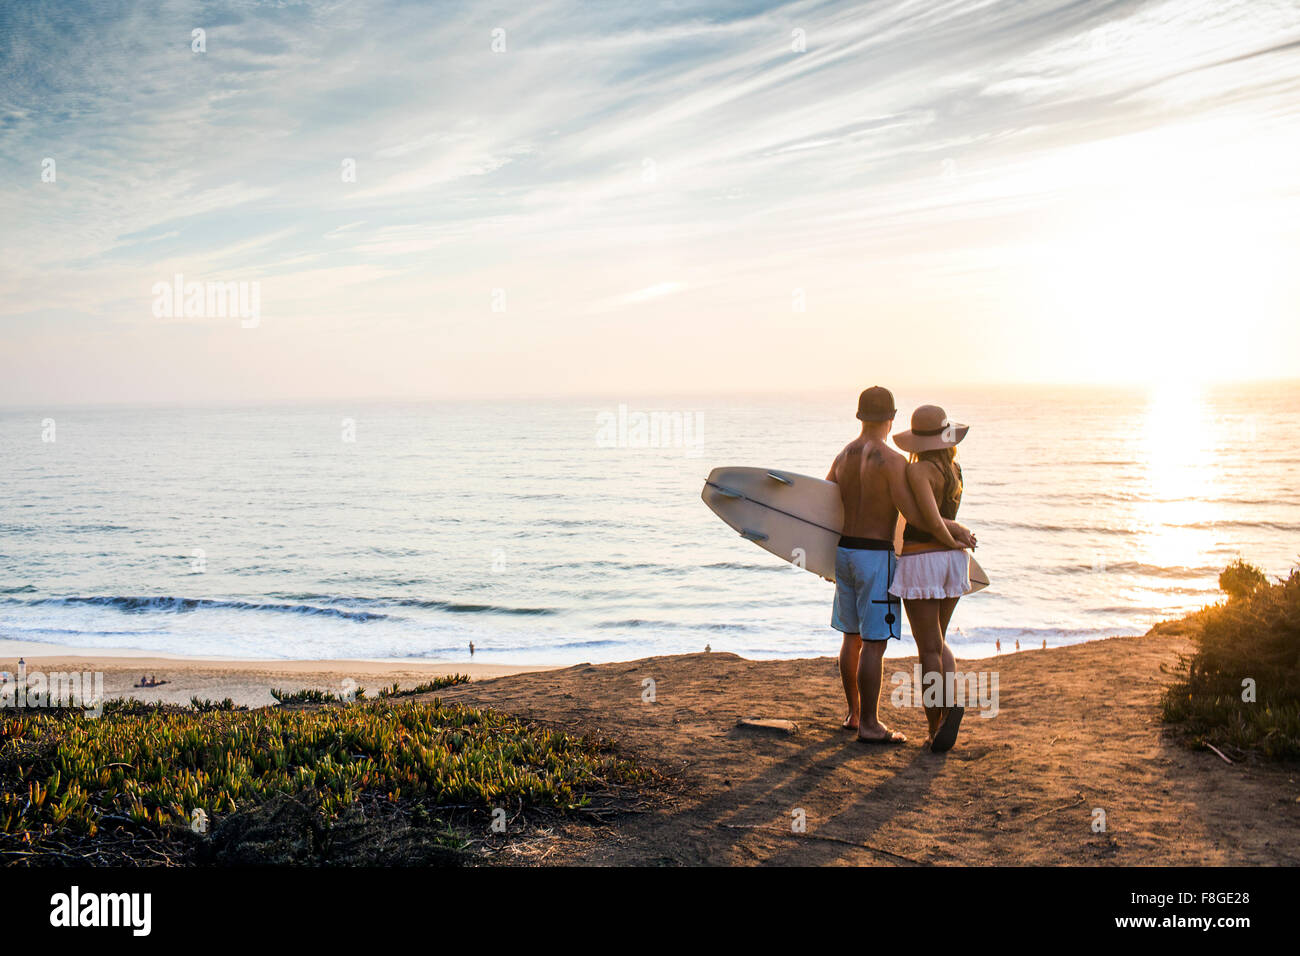 Caucasian couple admiring seascape at beach Stock Photo